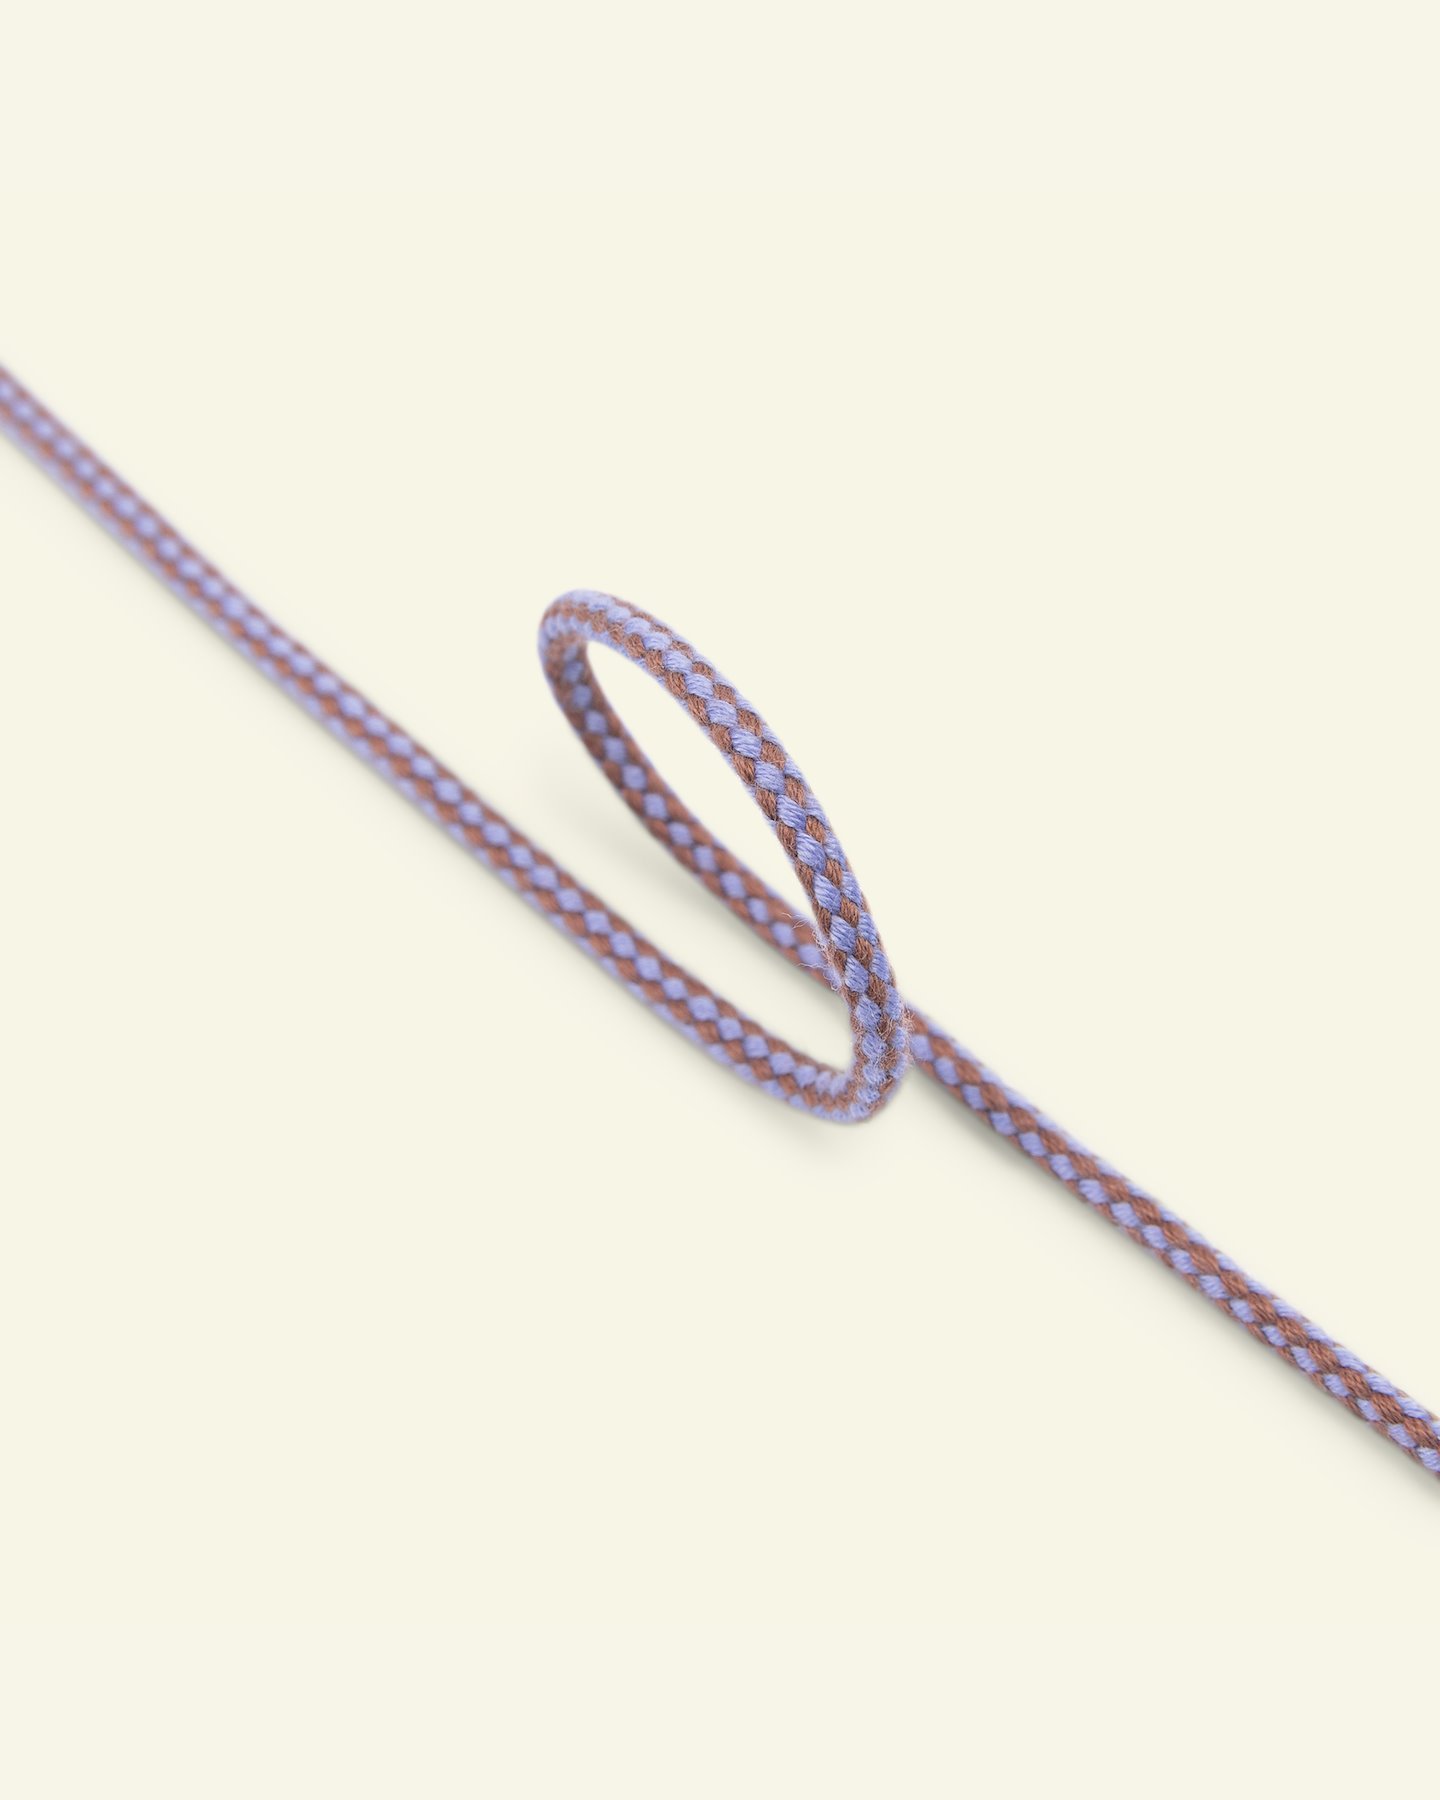 Anorak cord 3,5mm terra./purple 5m 75006_pack.png